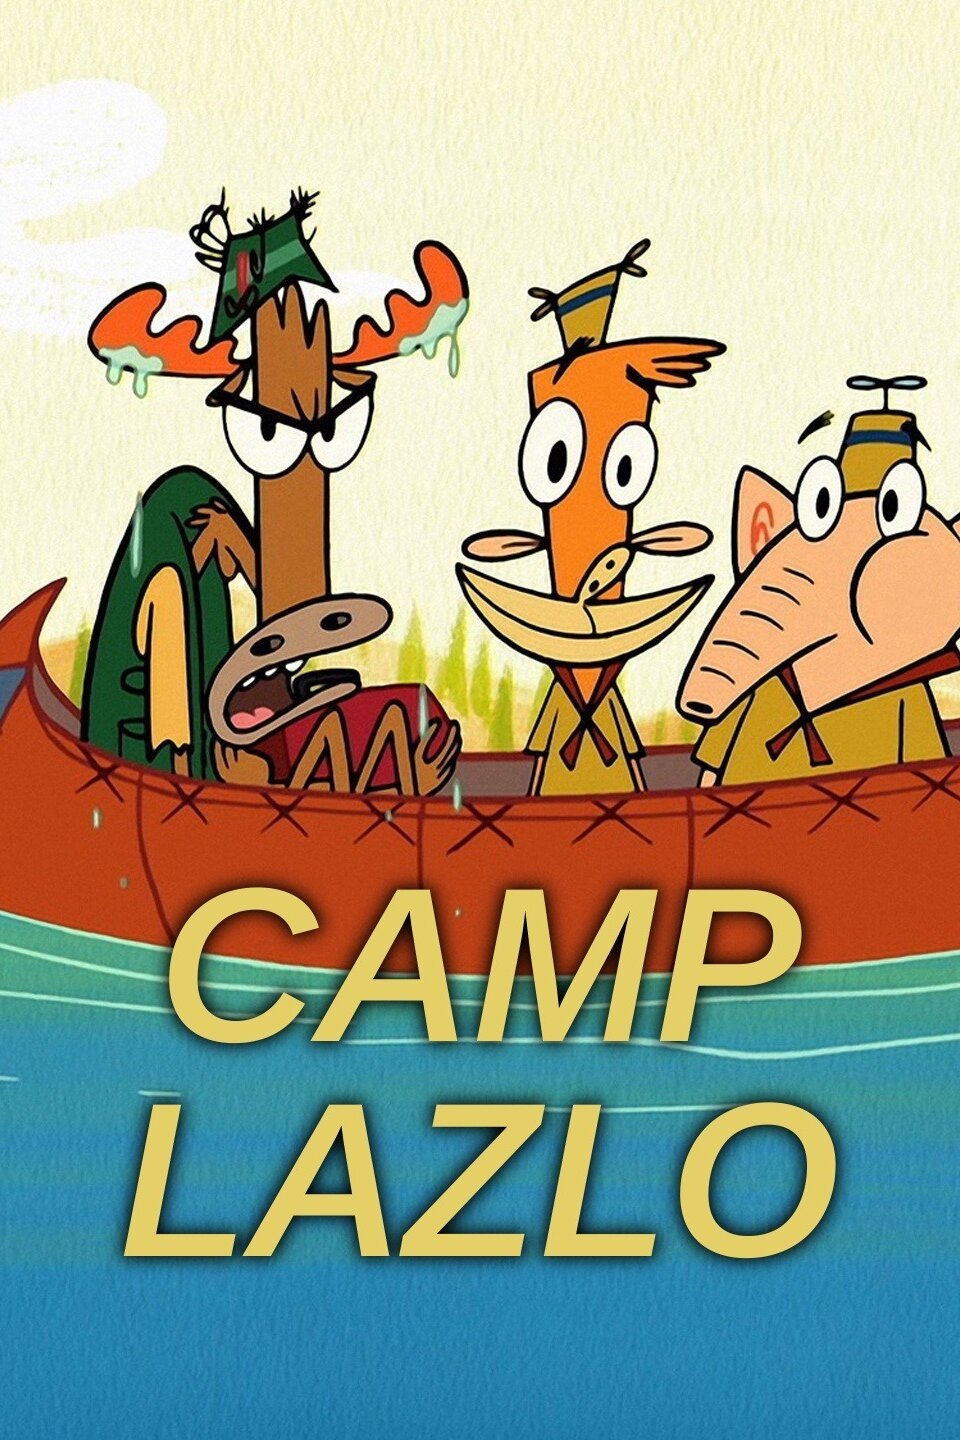 Camp Lazlo - Rotten Tomatoes